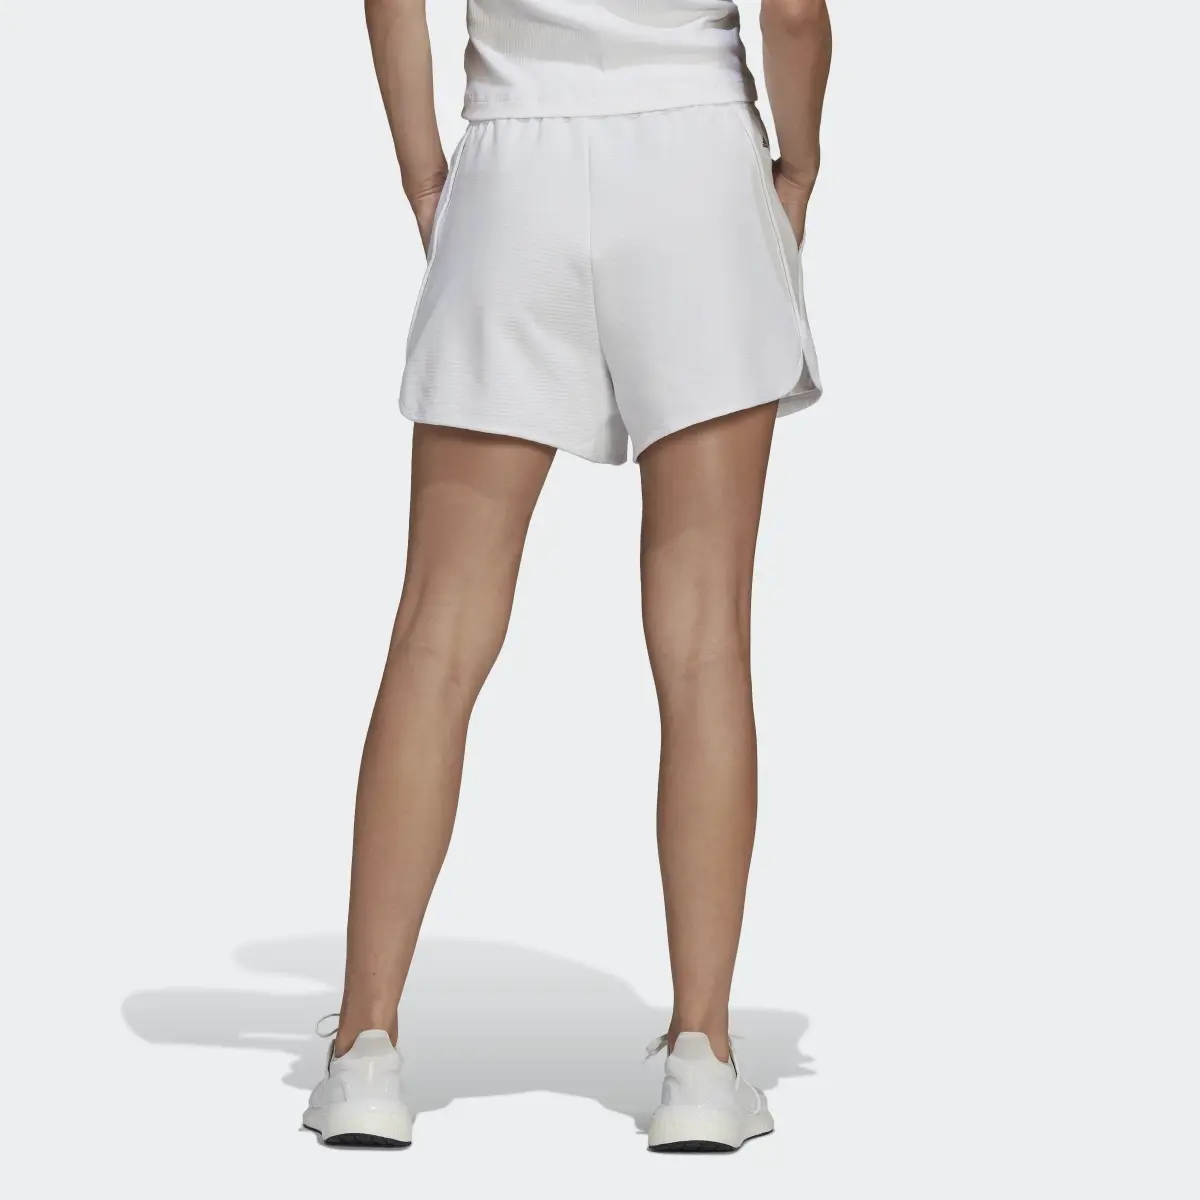 Adidas Short Karlie Kloss x adidas. 2